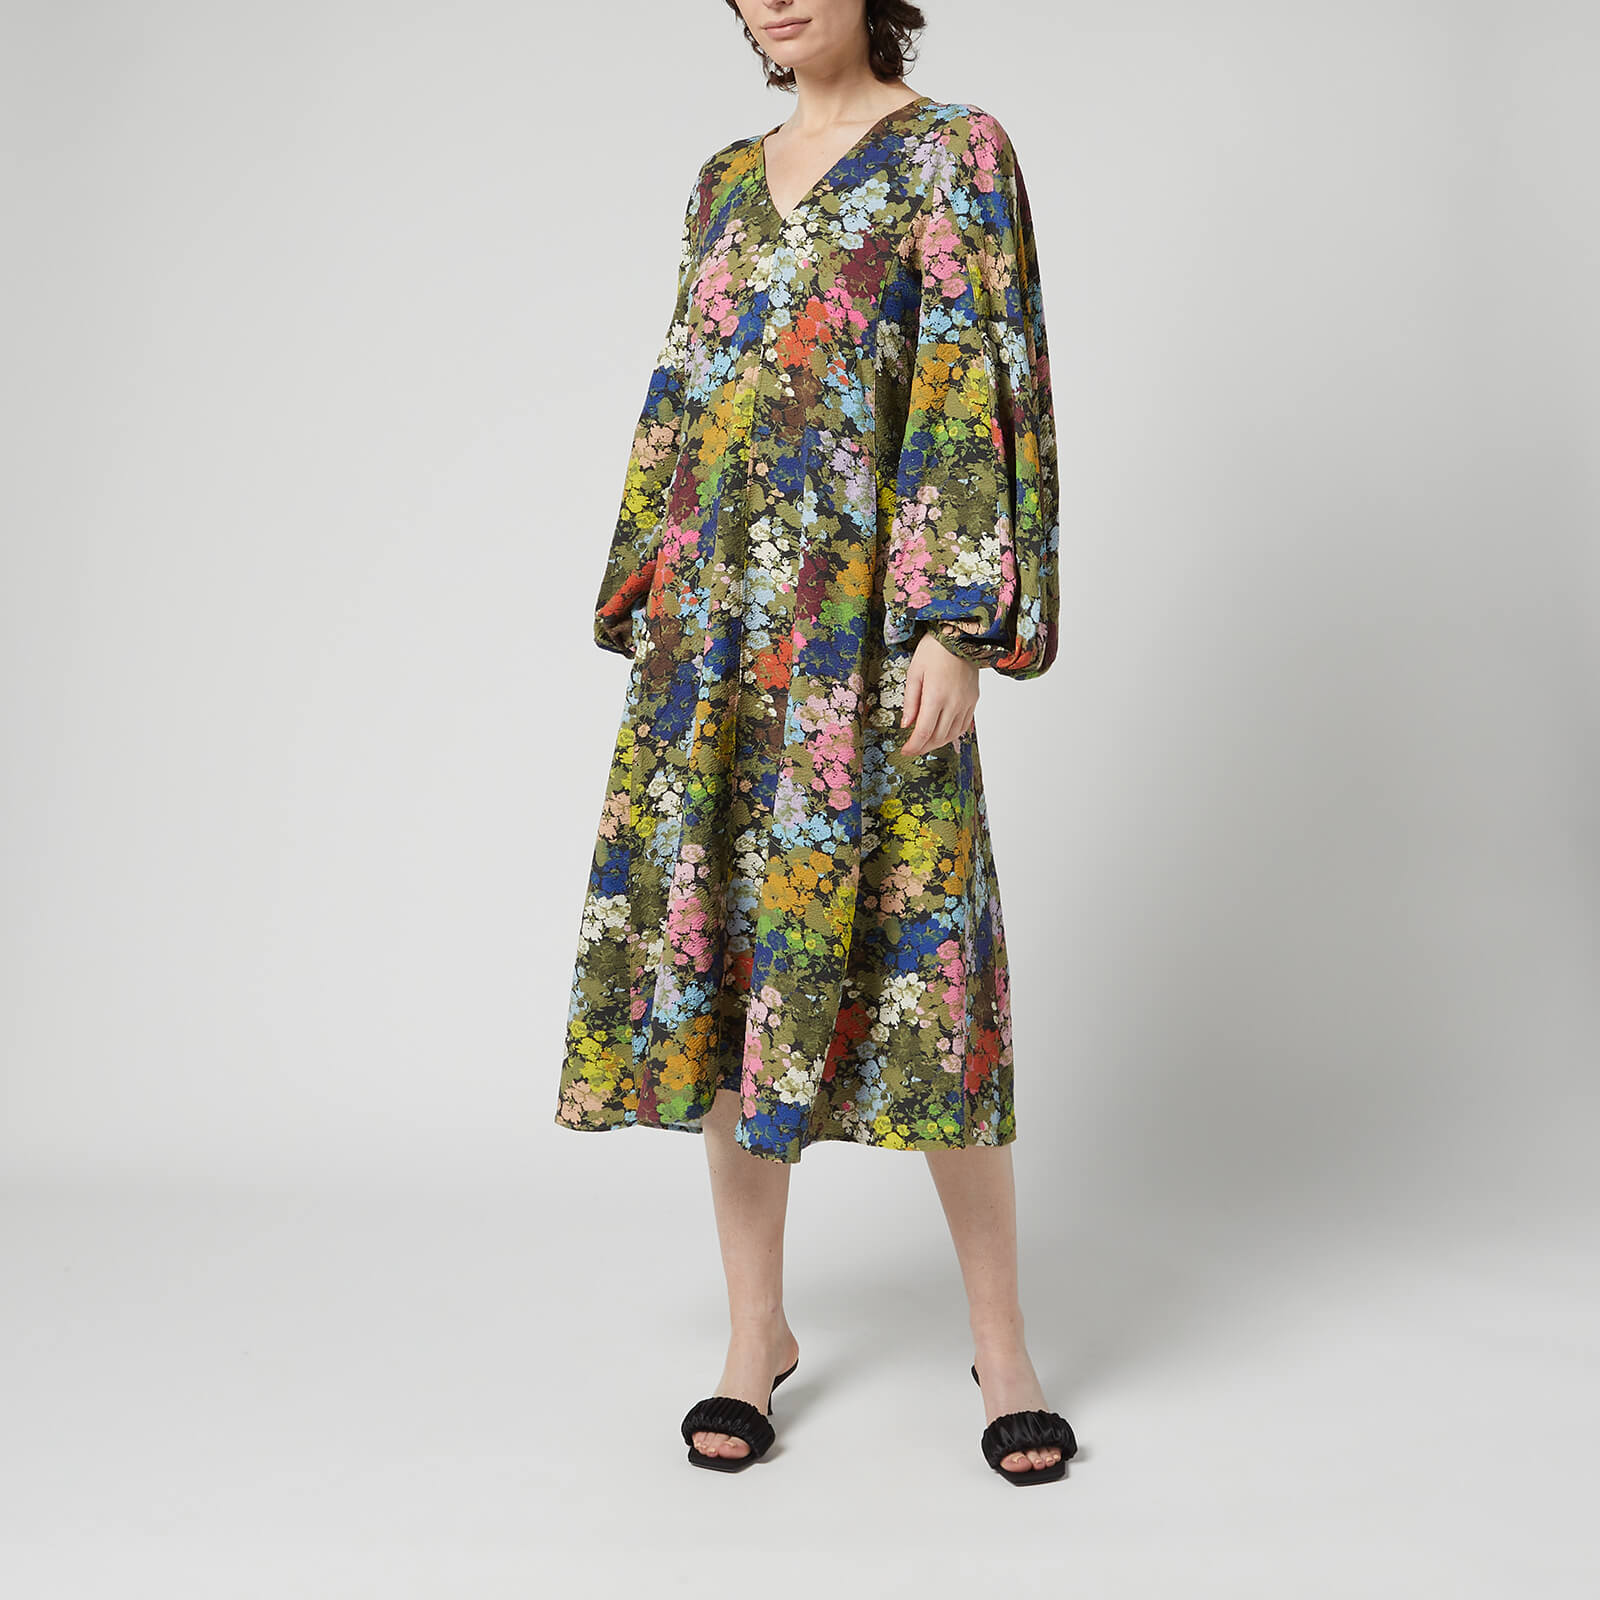 Stine Goya Women's Rosen Dress - Jungle Bloom - S